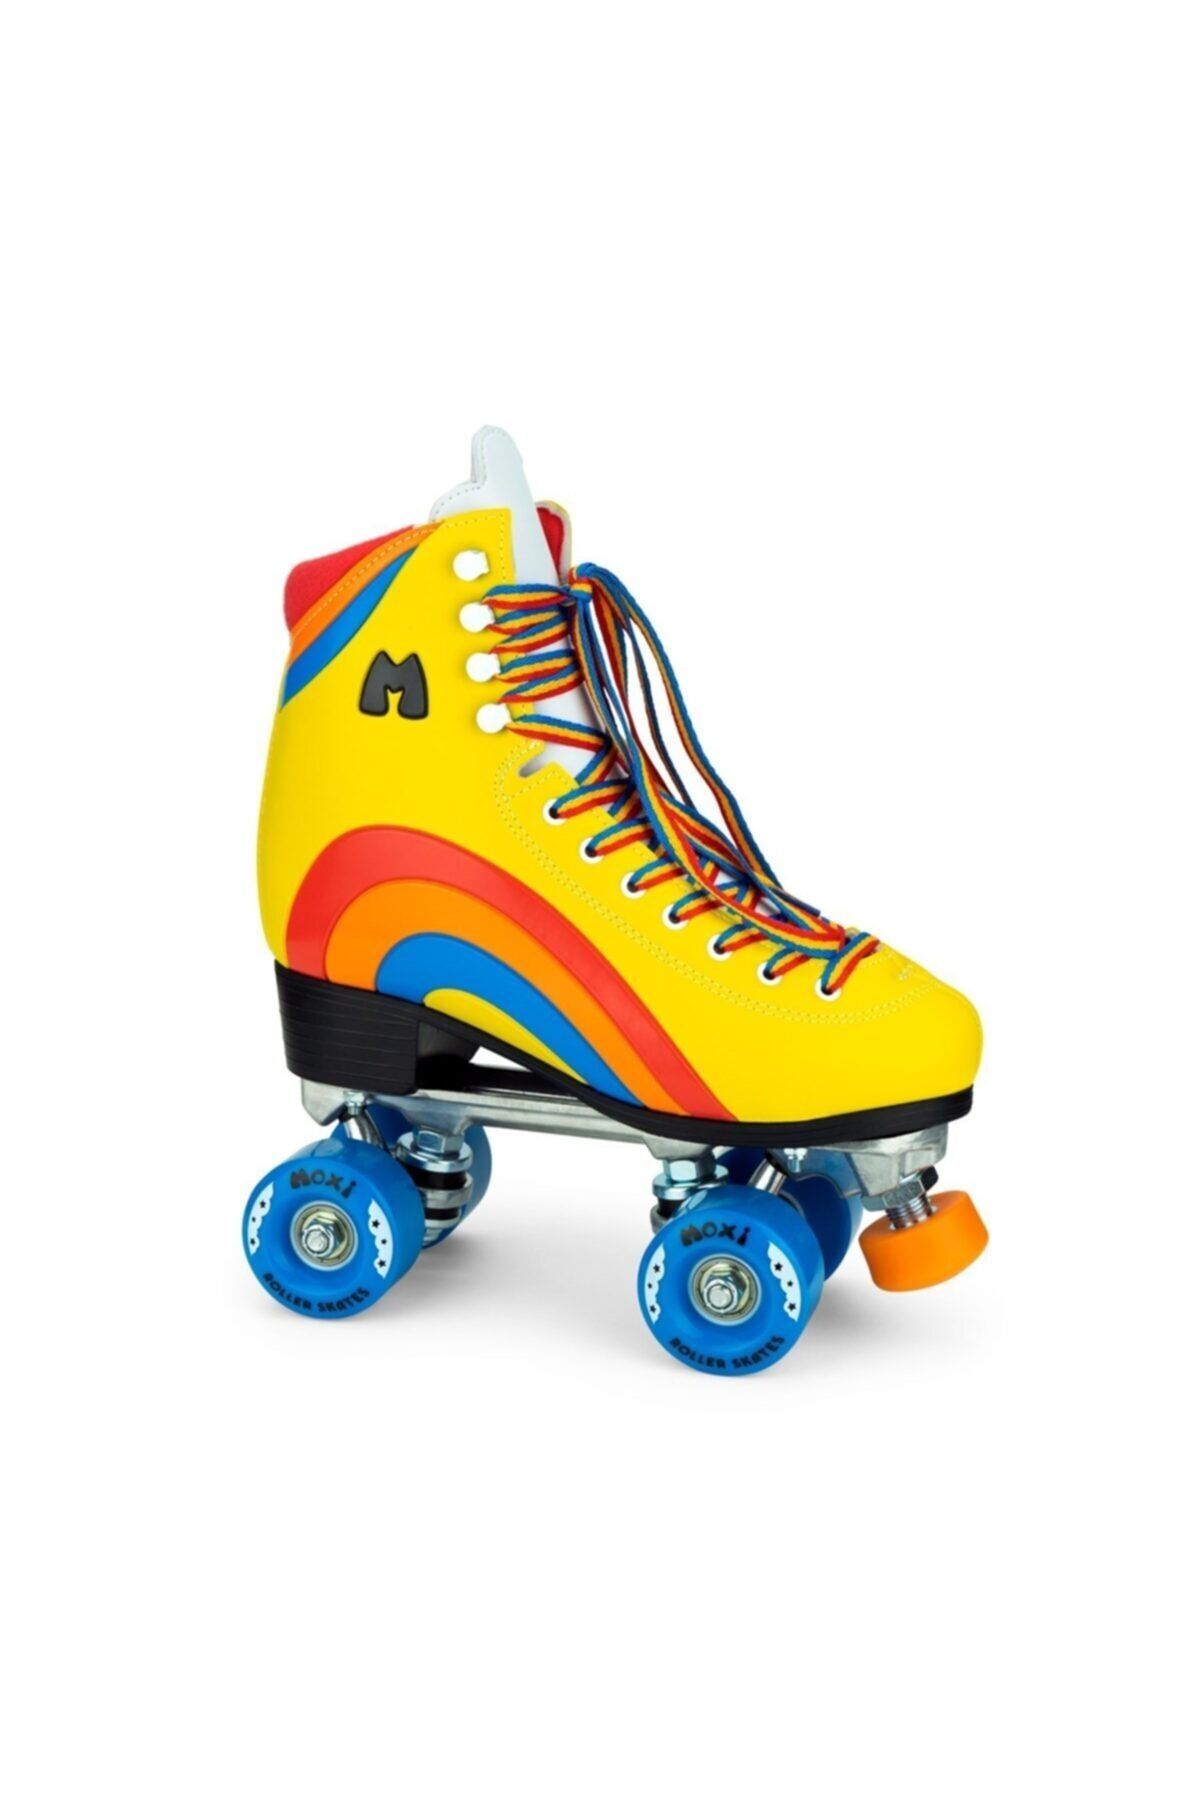 Moxi Skates Rainbow Rider Yellow Quad Paten